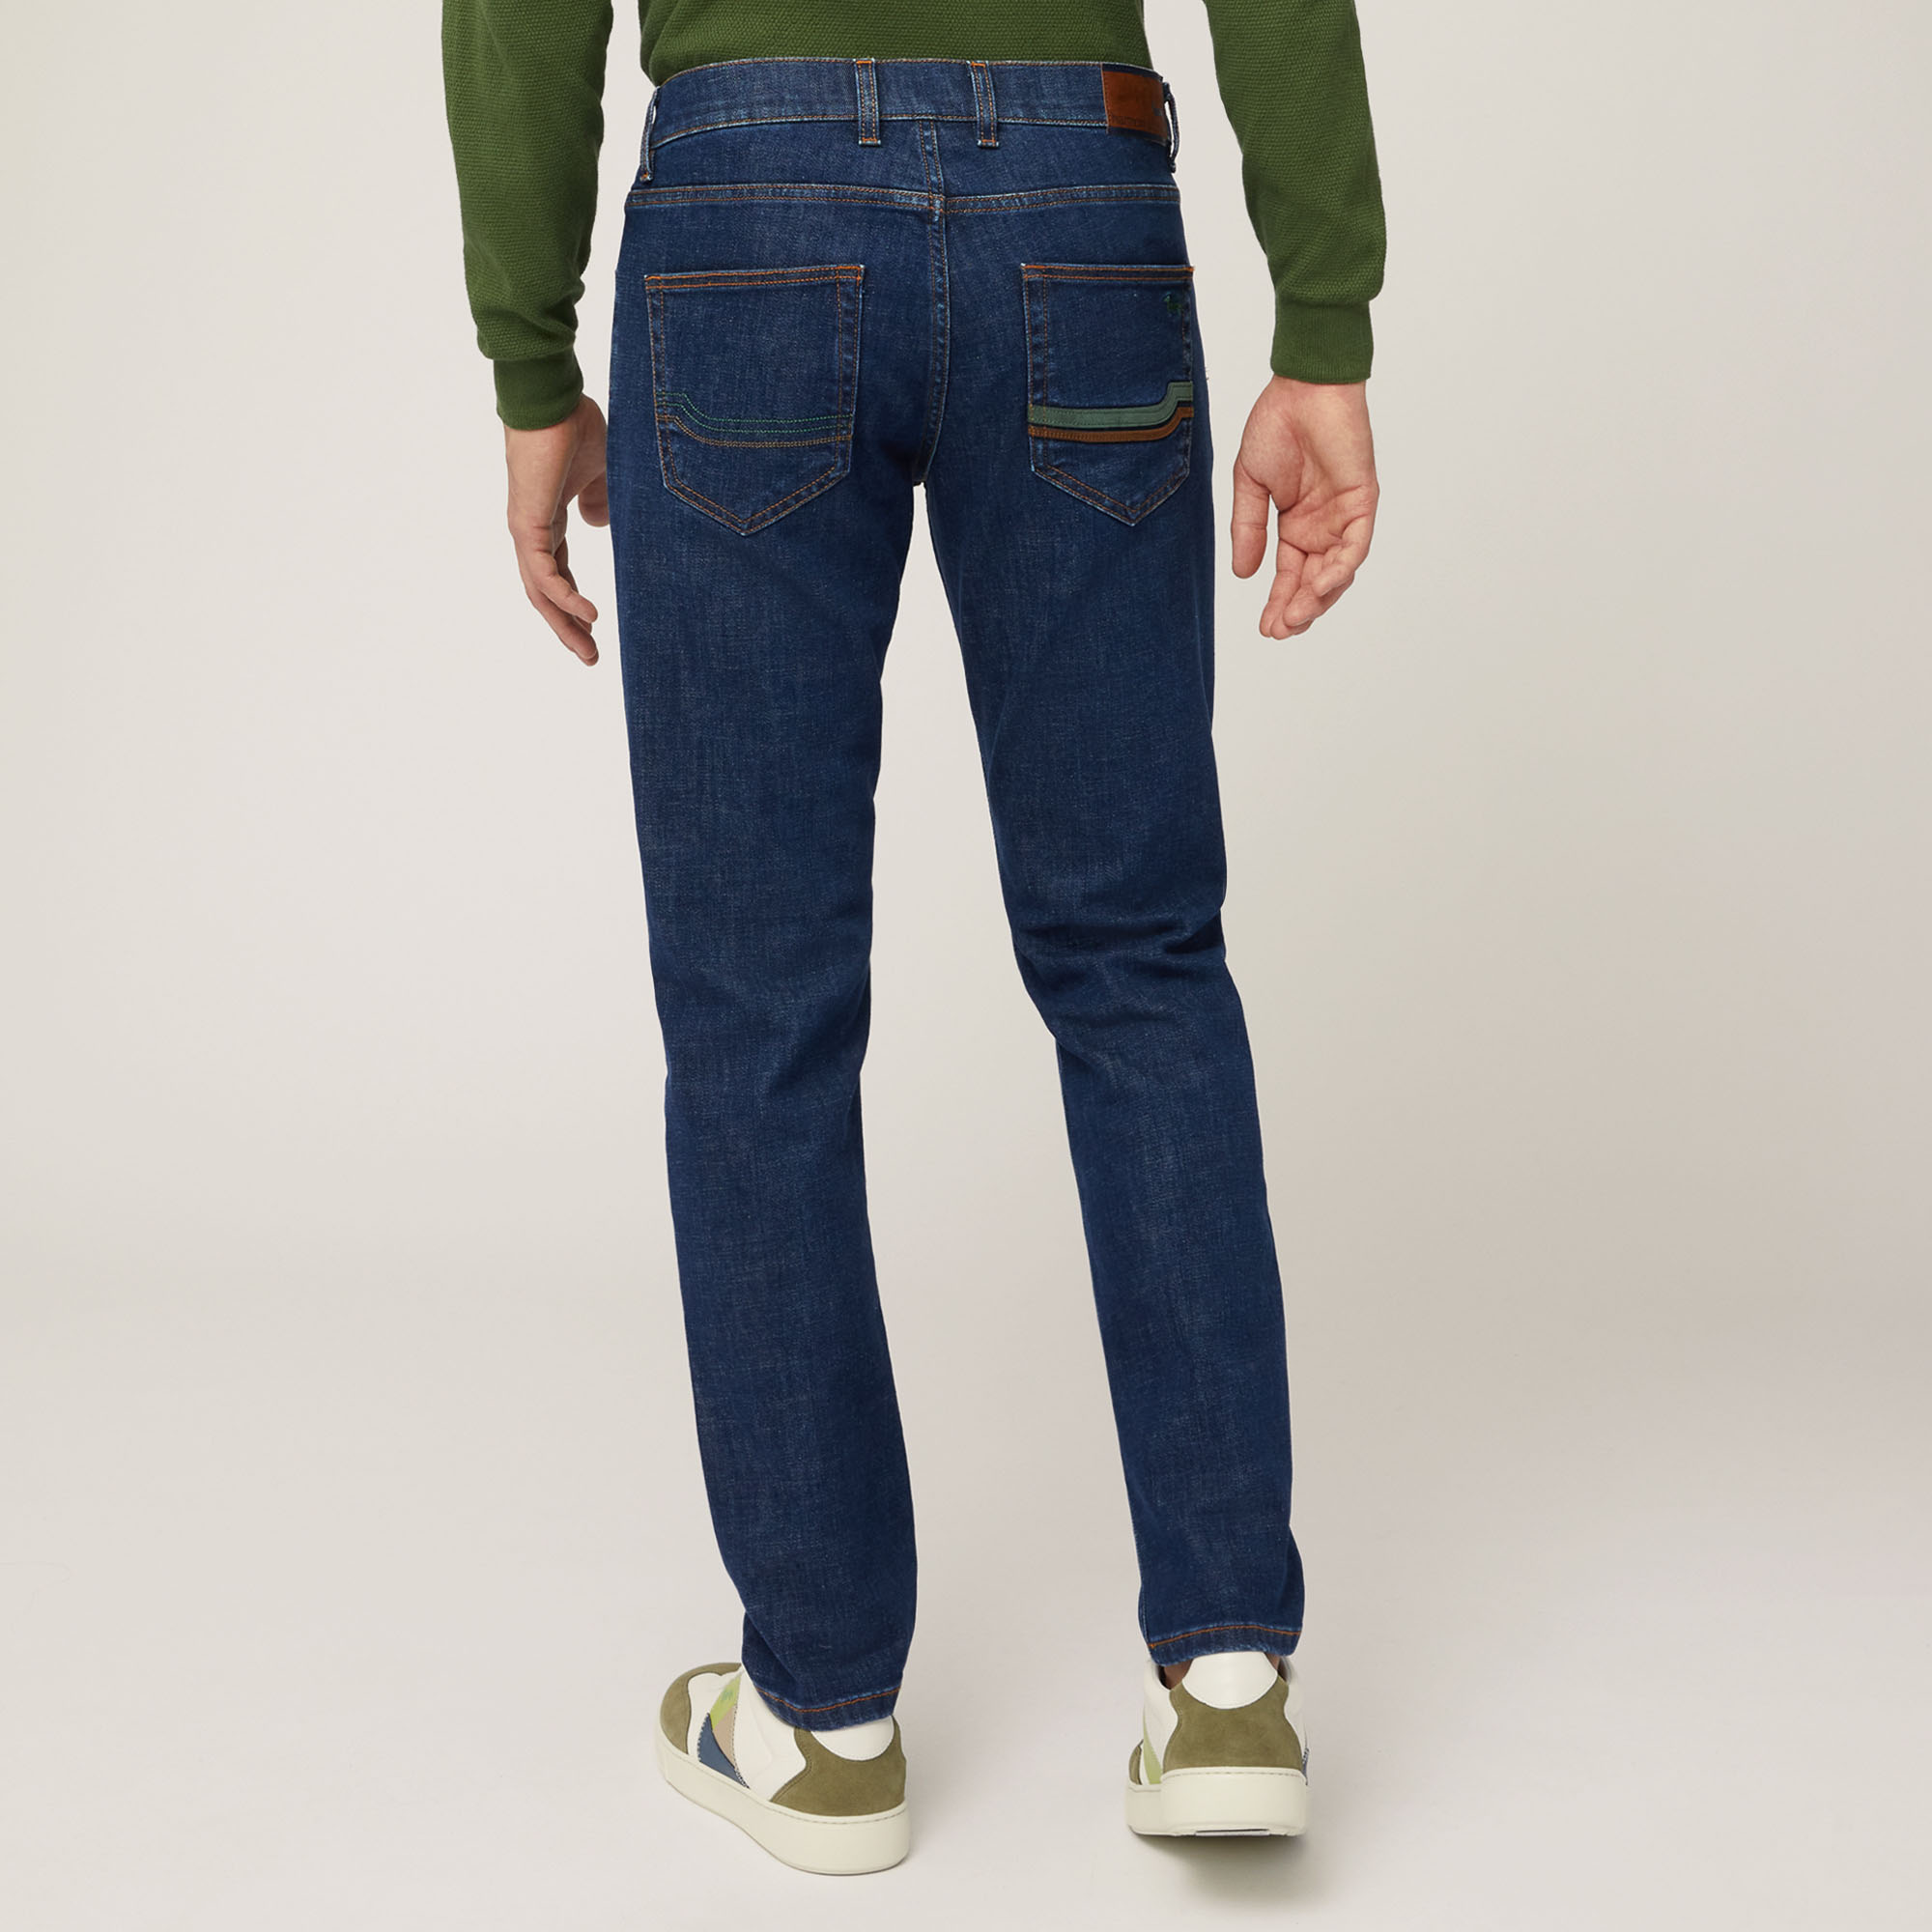 Pantaloni 5 Tasche Con Inserti, Verde Scuro, large image number 1